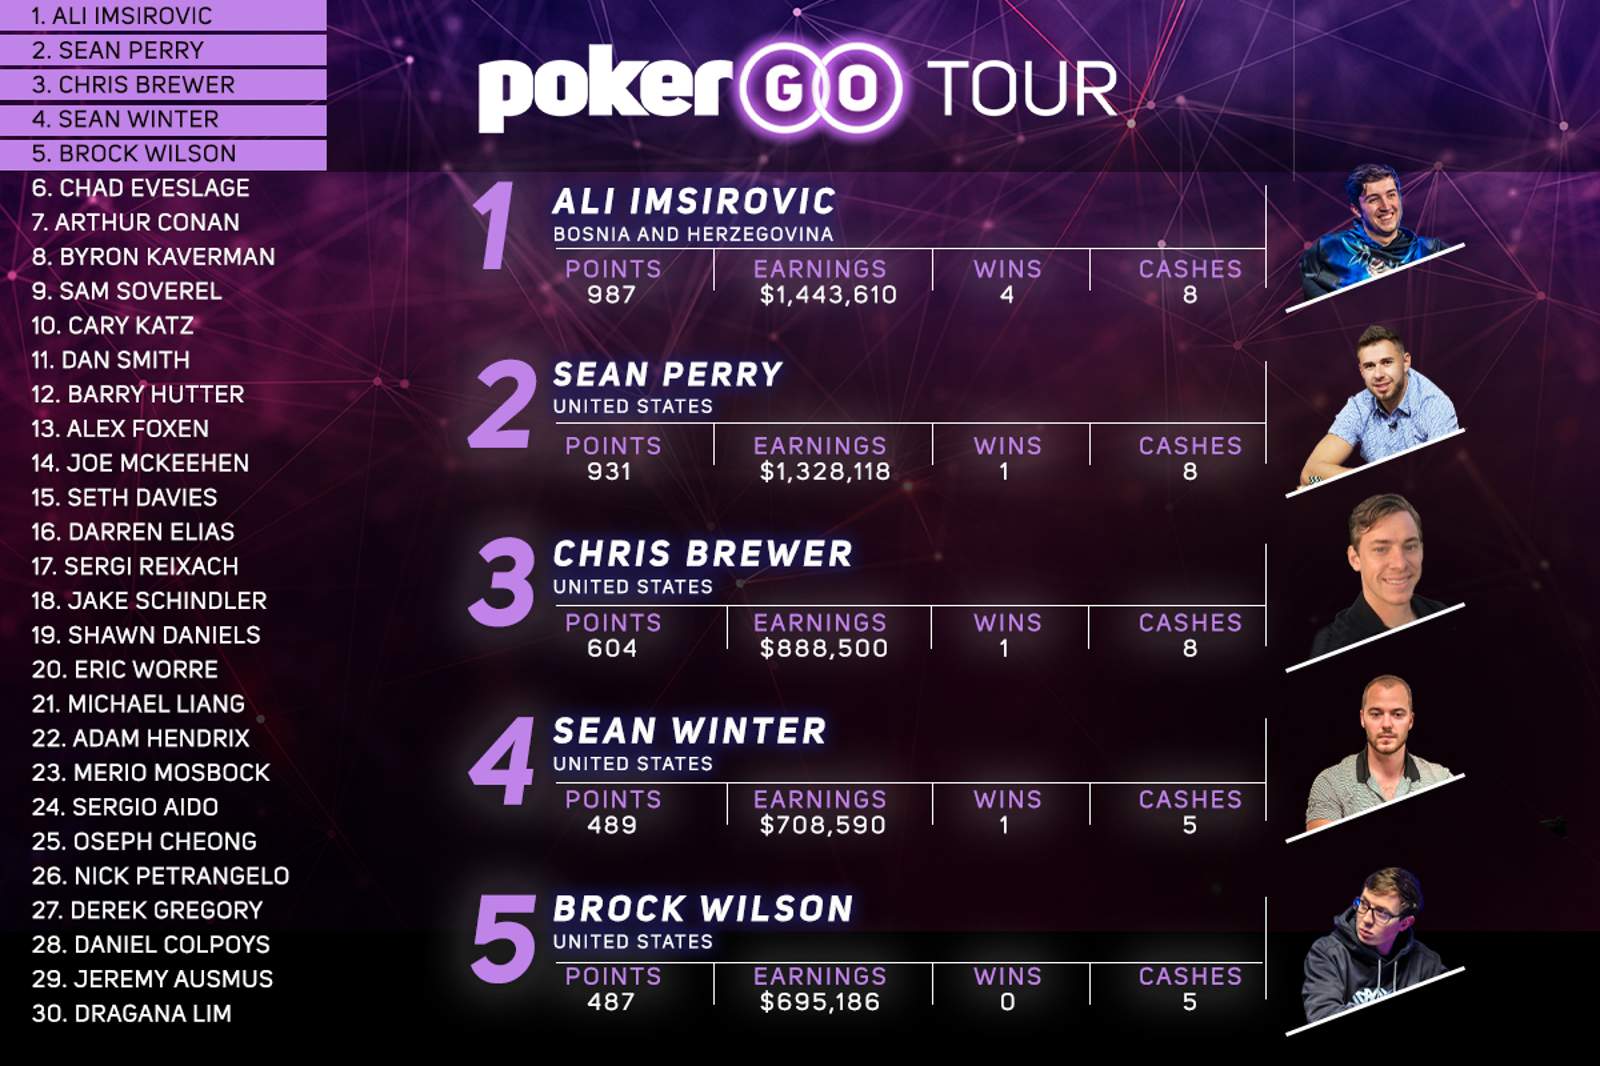 PokerGO Tour Leaderboard: Ali Imsirovic Holds Top Spot